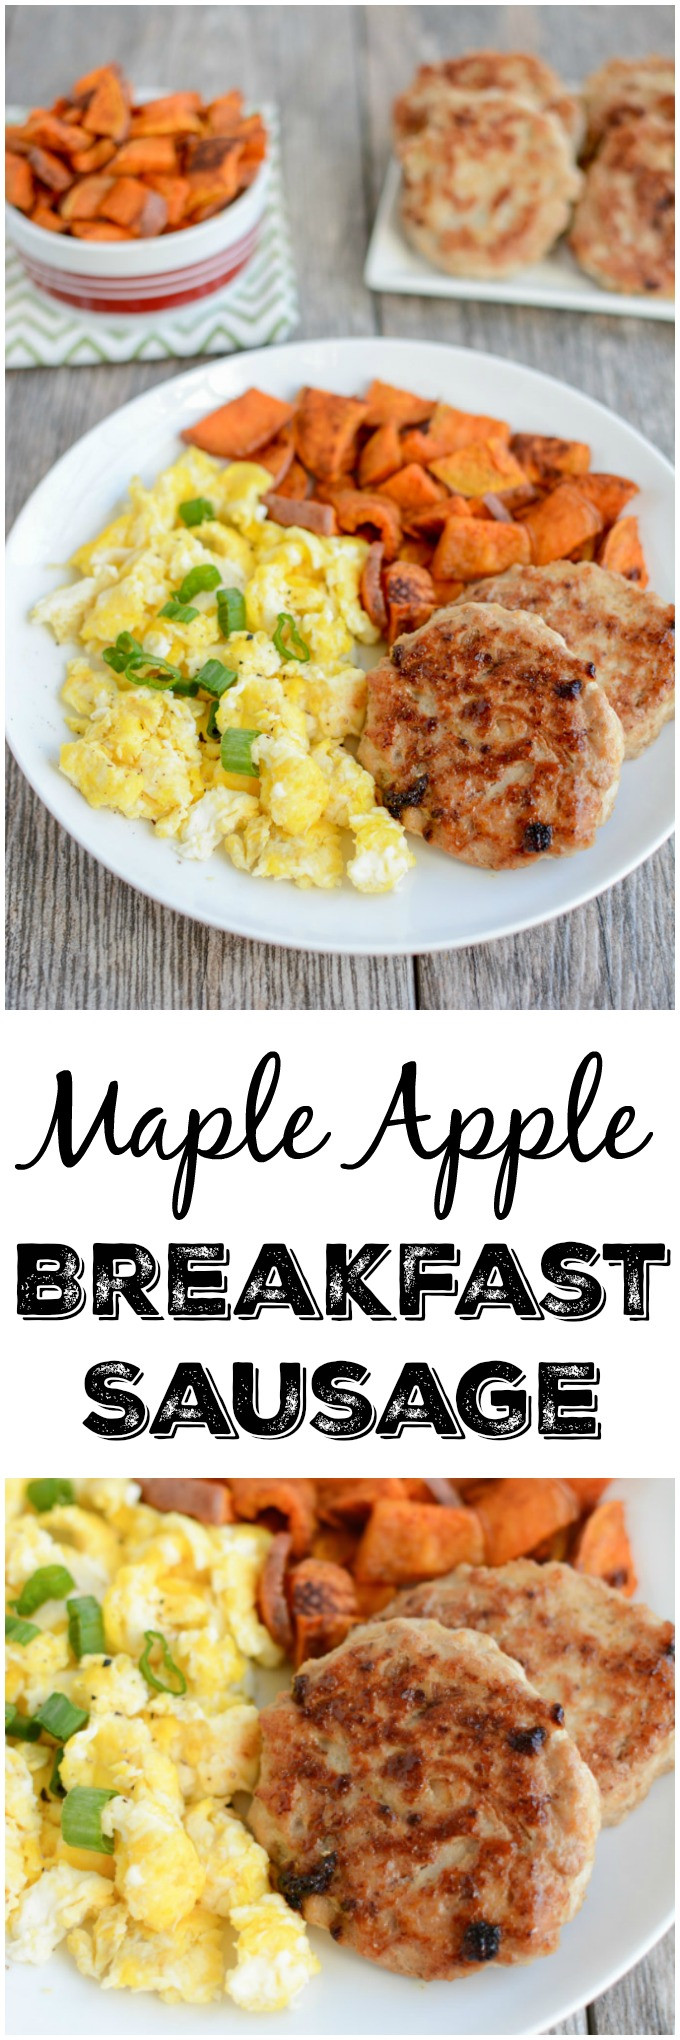 Maple Breakfast Sausage Recipe
 Maple Apple Breakfast Sausage